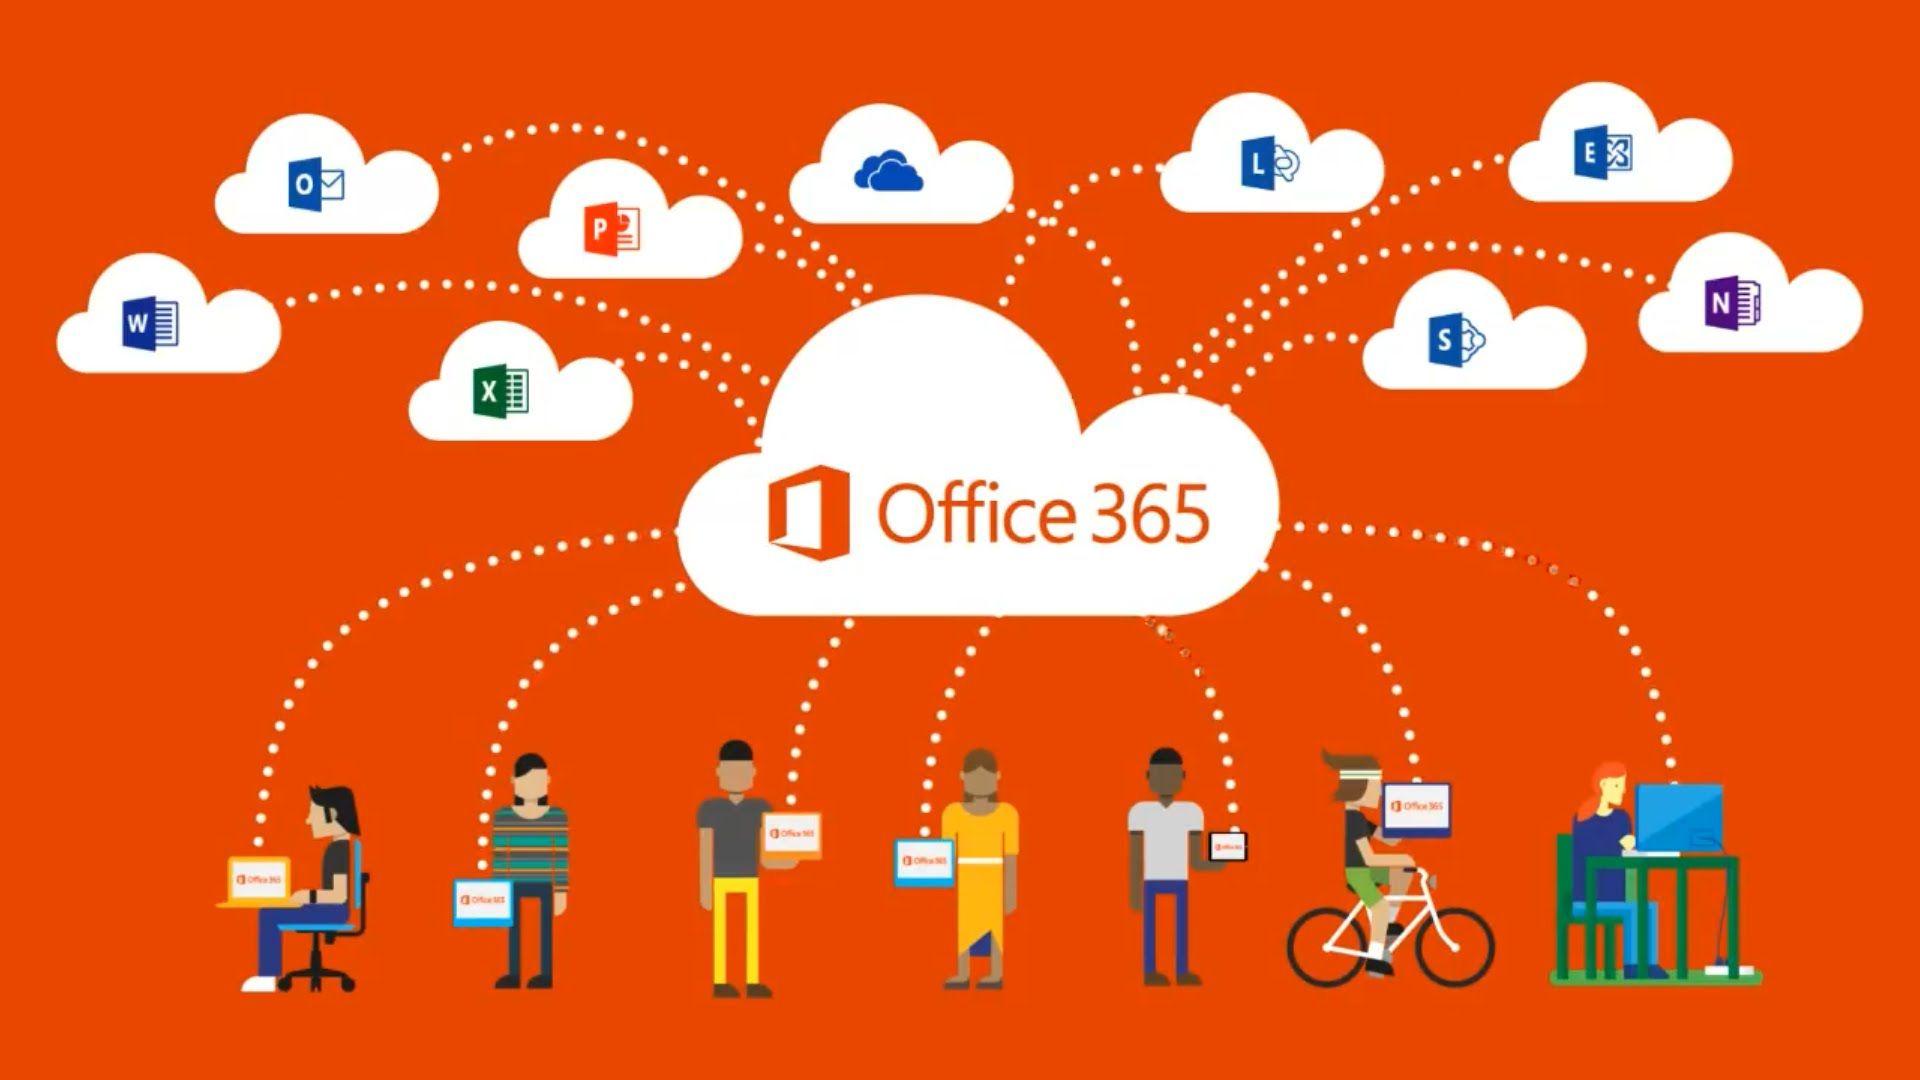 Microsoft Office 365 Cloud Logo - Office 365 Top Ten Benefits for 2016